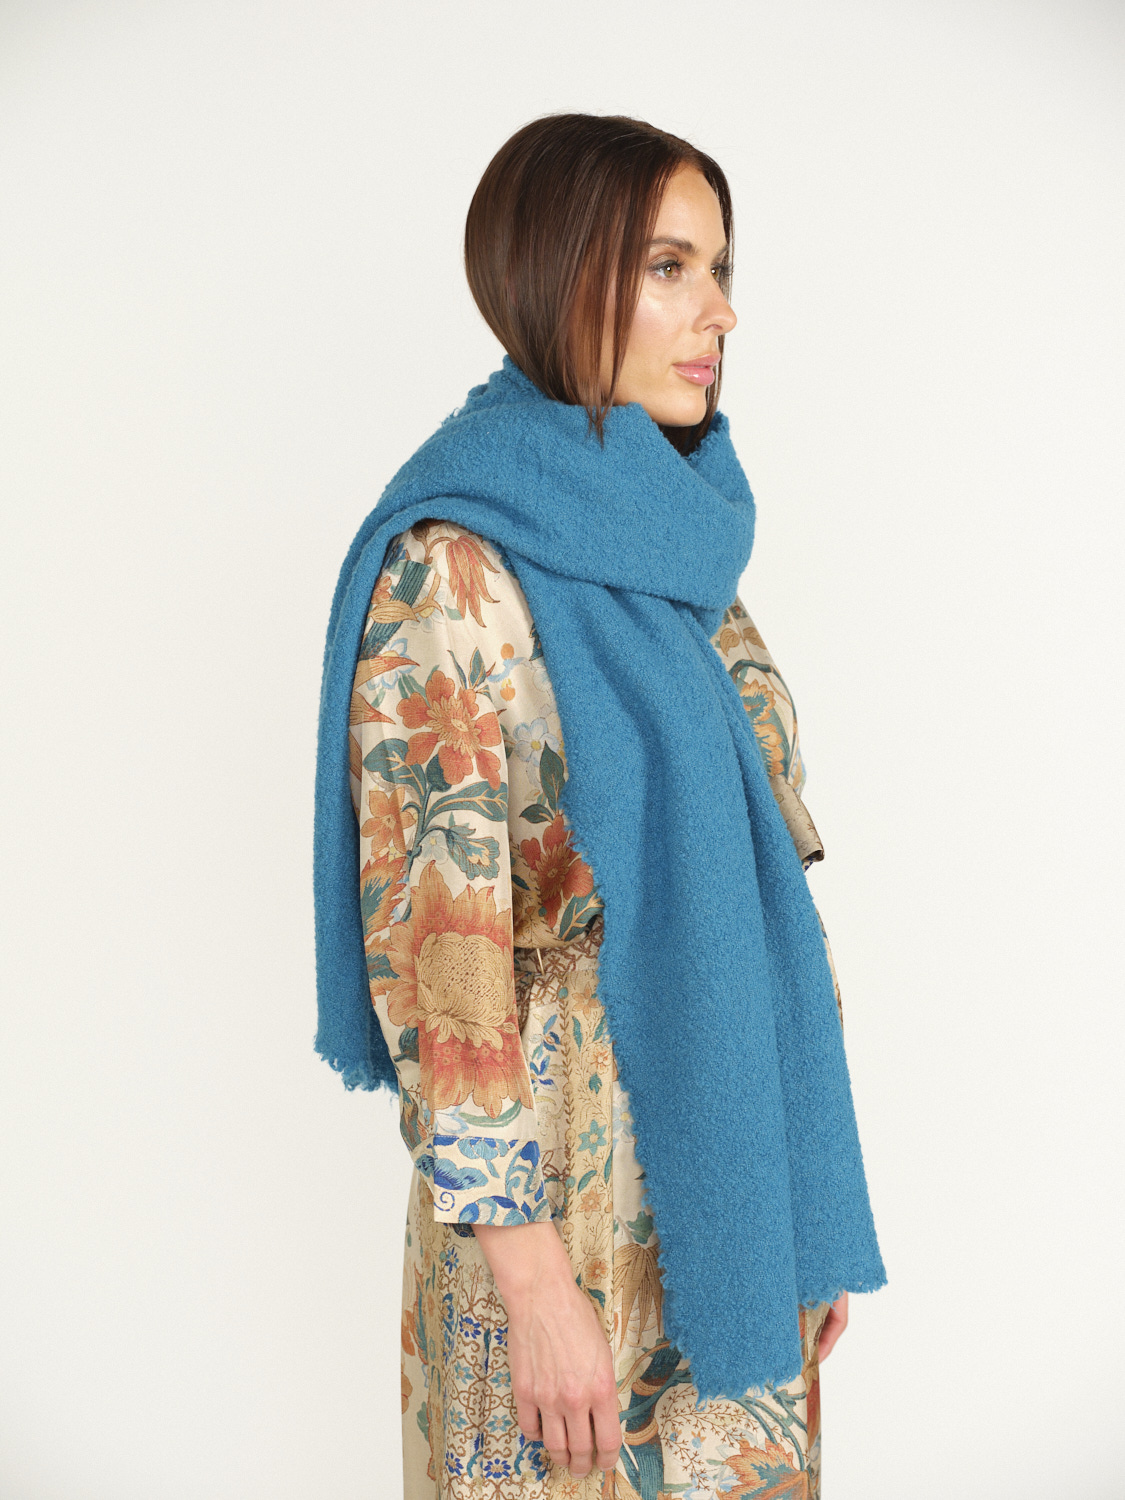 Faliero Sarti Alexia - Wool and Cashmere Rectangular Scarf blue One Size